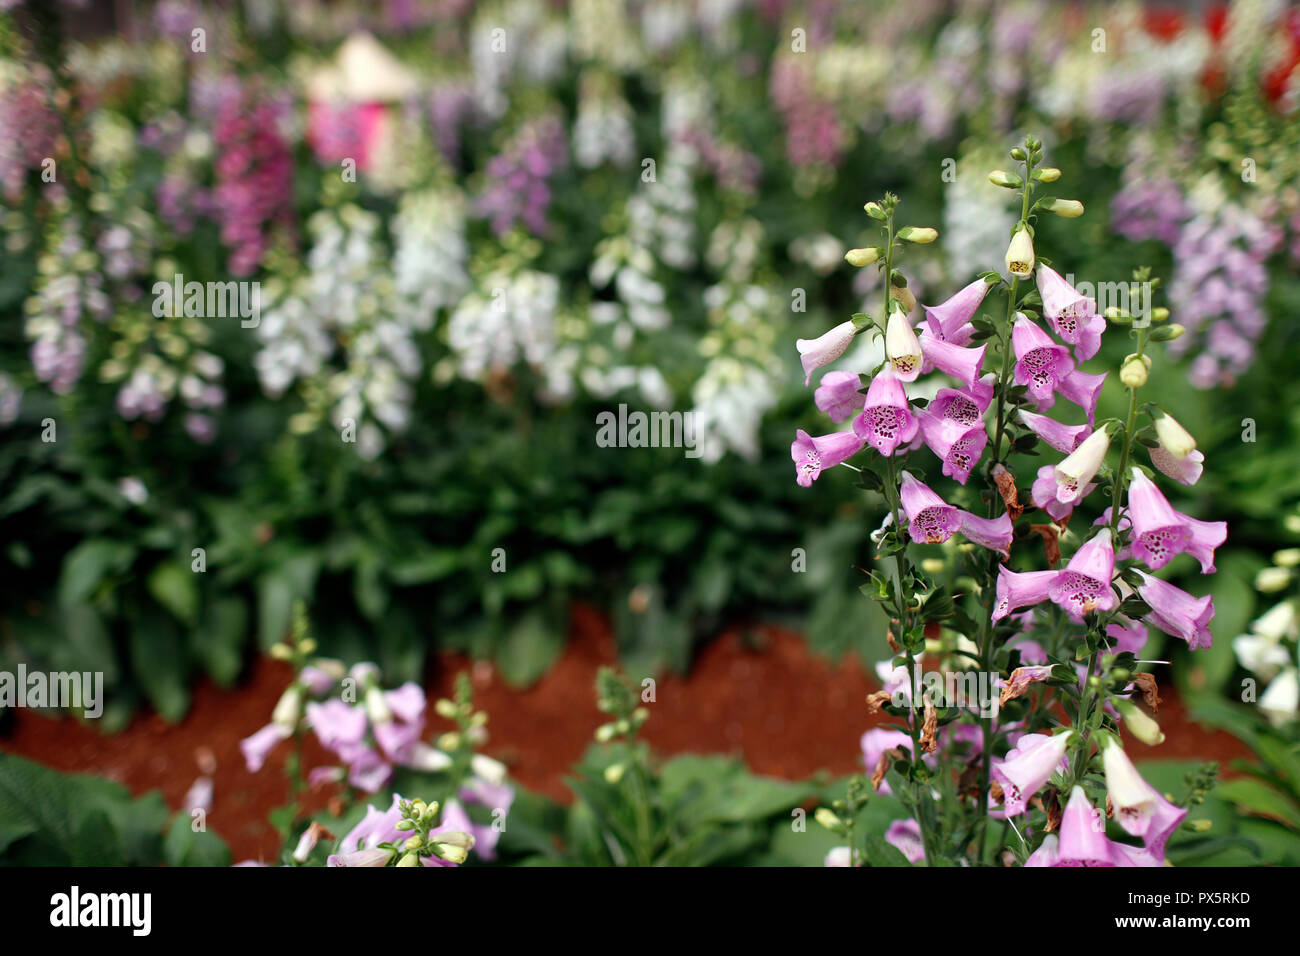 Organici vegetali hydroponic farm. Righe di fiori in serra. Bocche di leone. Dalat. Il Vietnam. Foto Stock